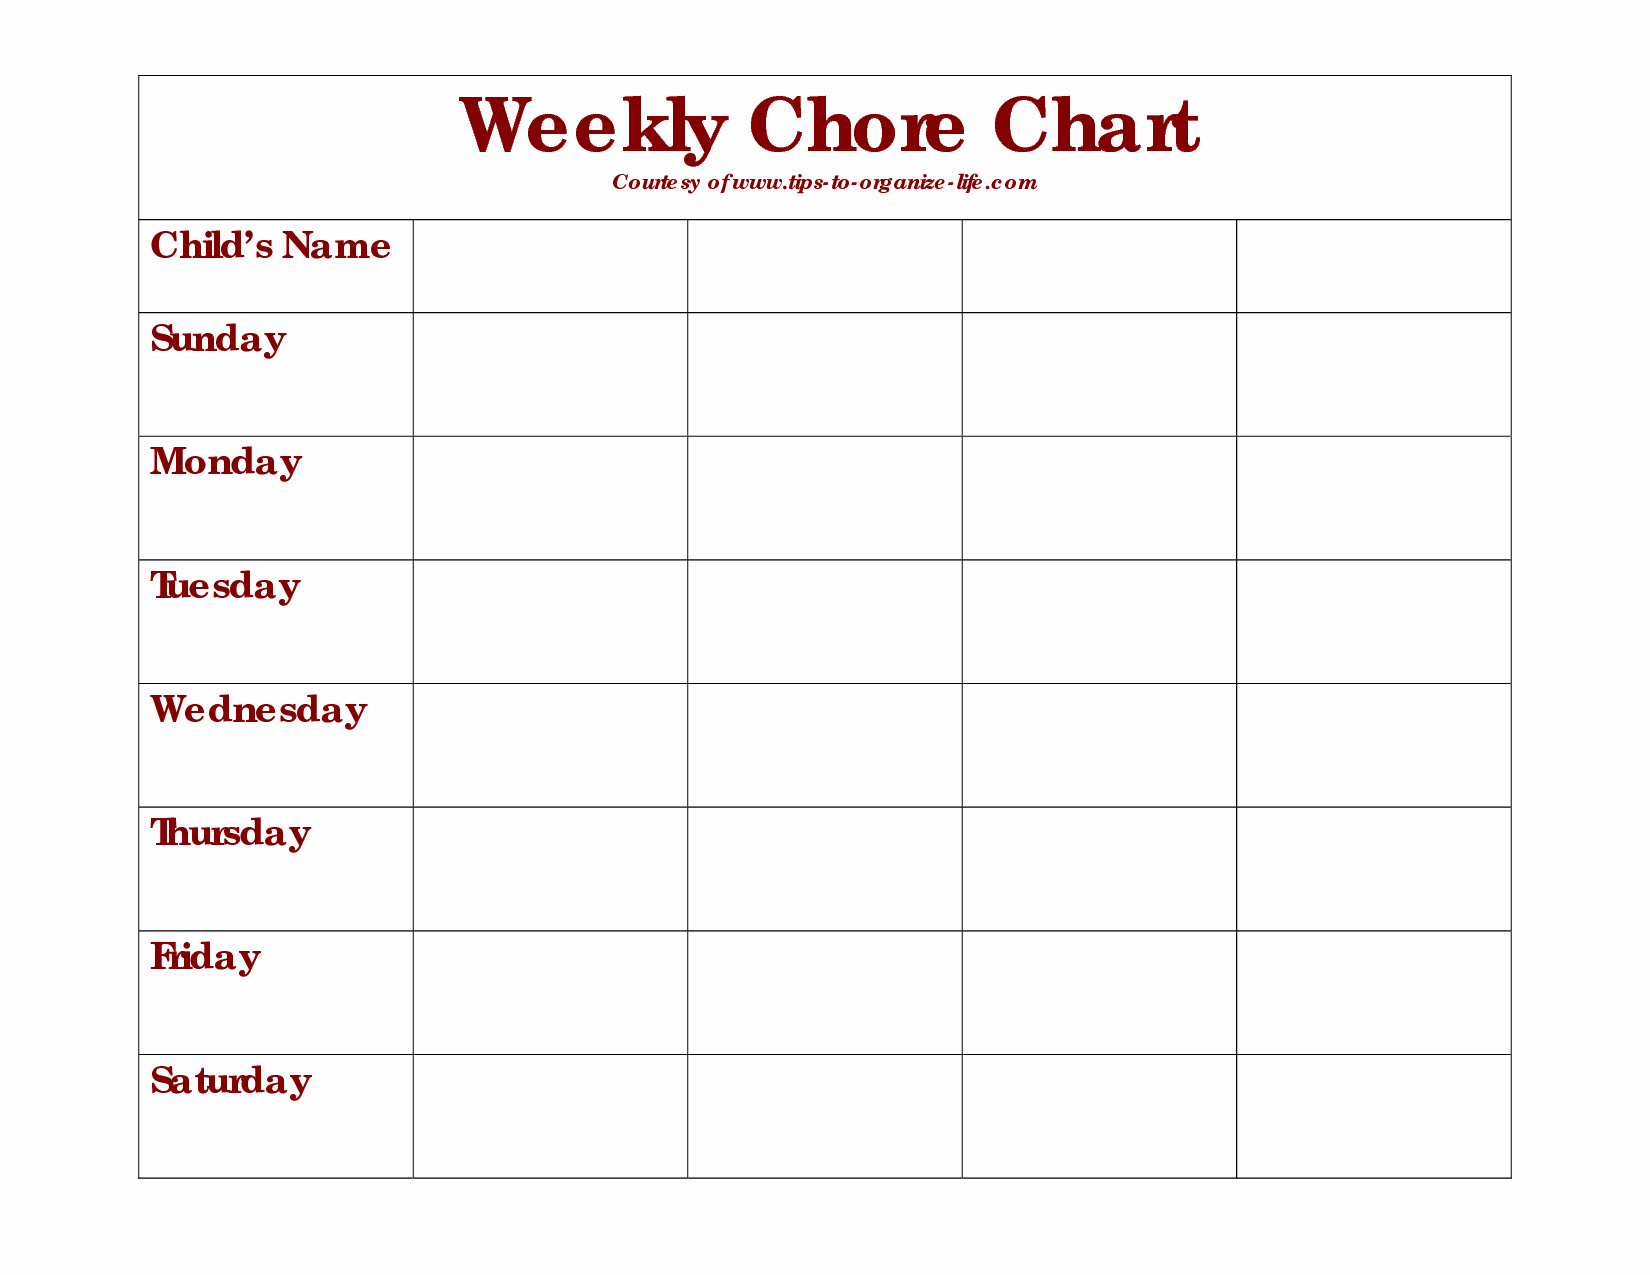 Monthly Chore Chart Template Beautiful Weekly Chore Chart